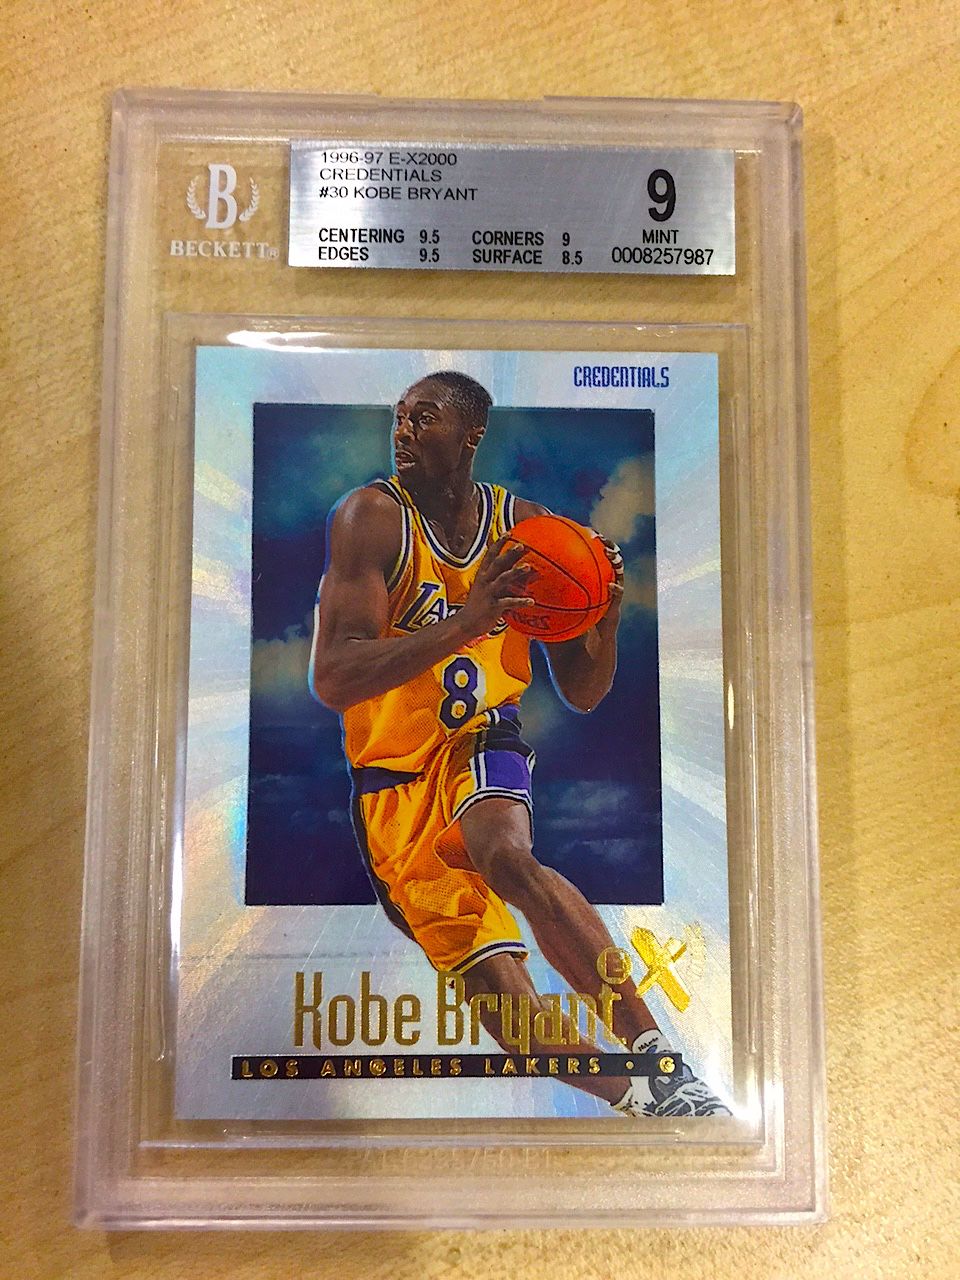 1996-97 E-X2000 Credentials #30 Kobe Bryant.JPG